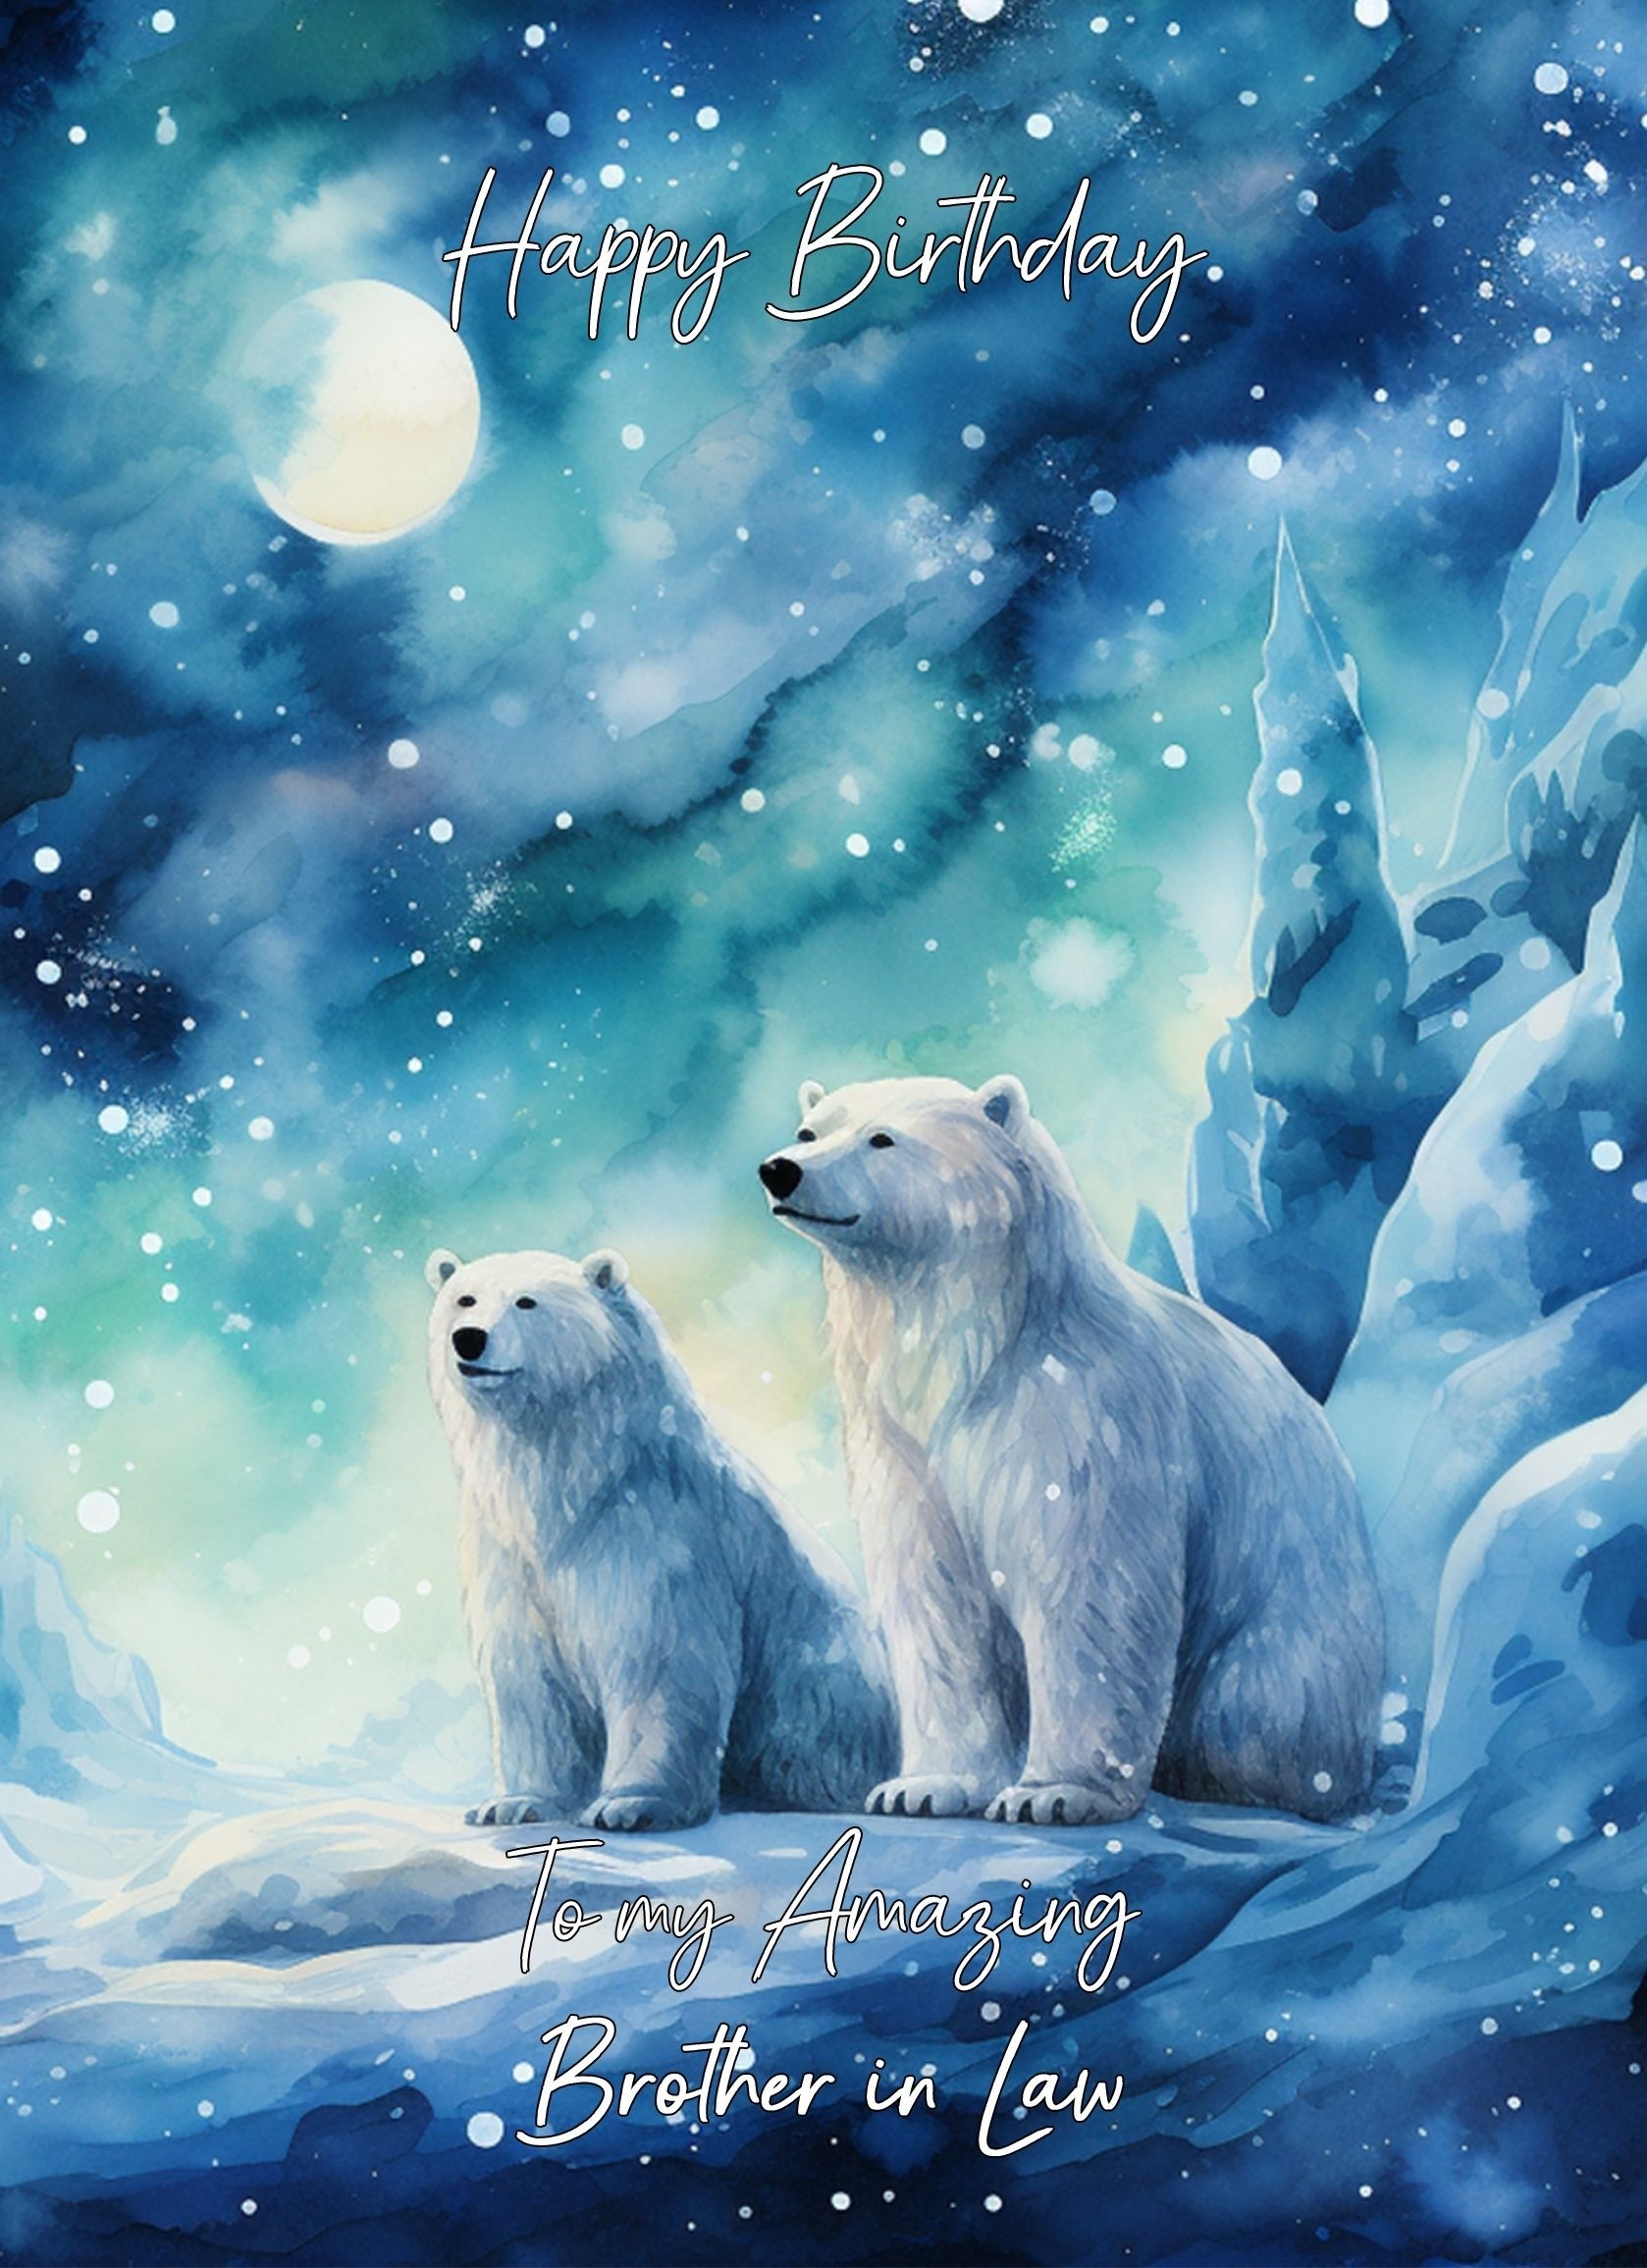 Polar Bear Art Birthday Card For Brother in Law (Design 2)